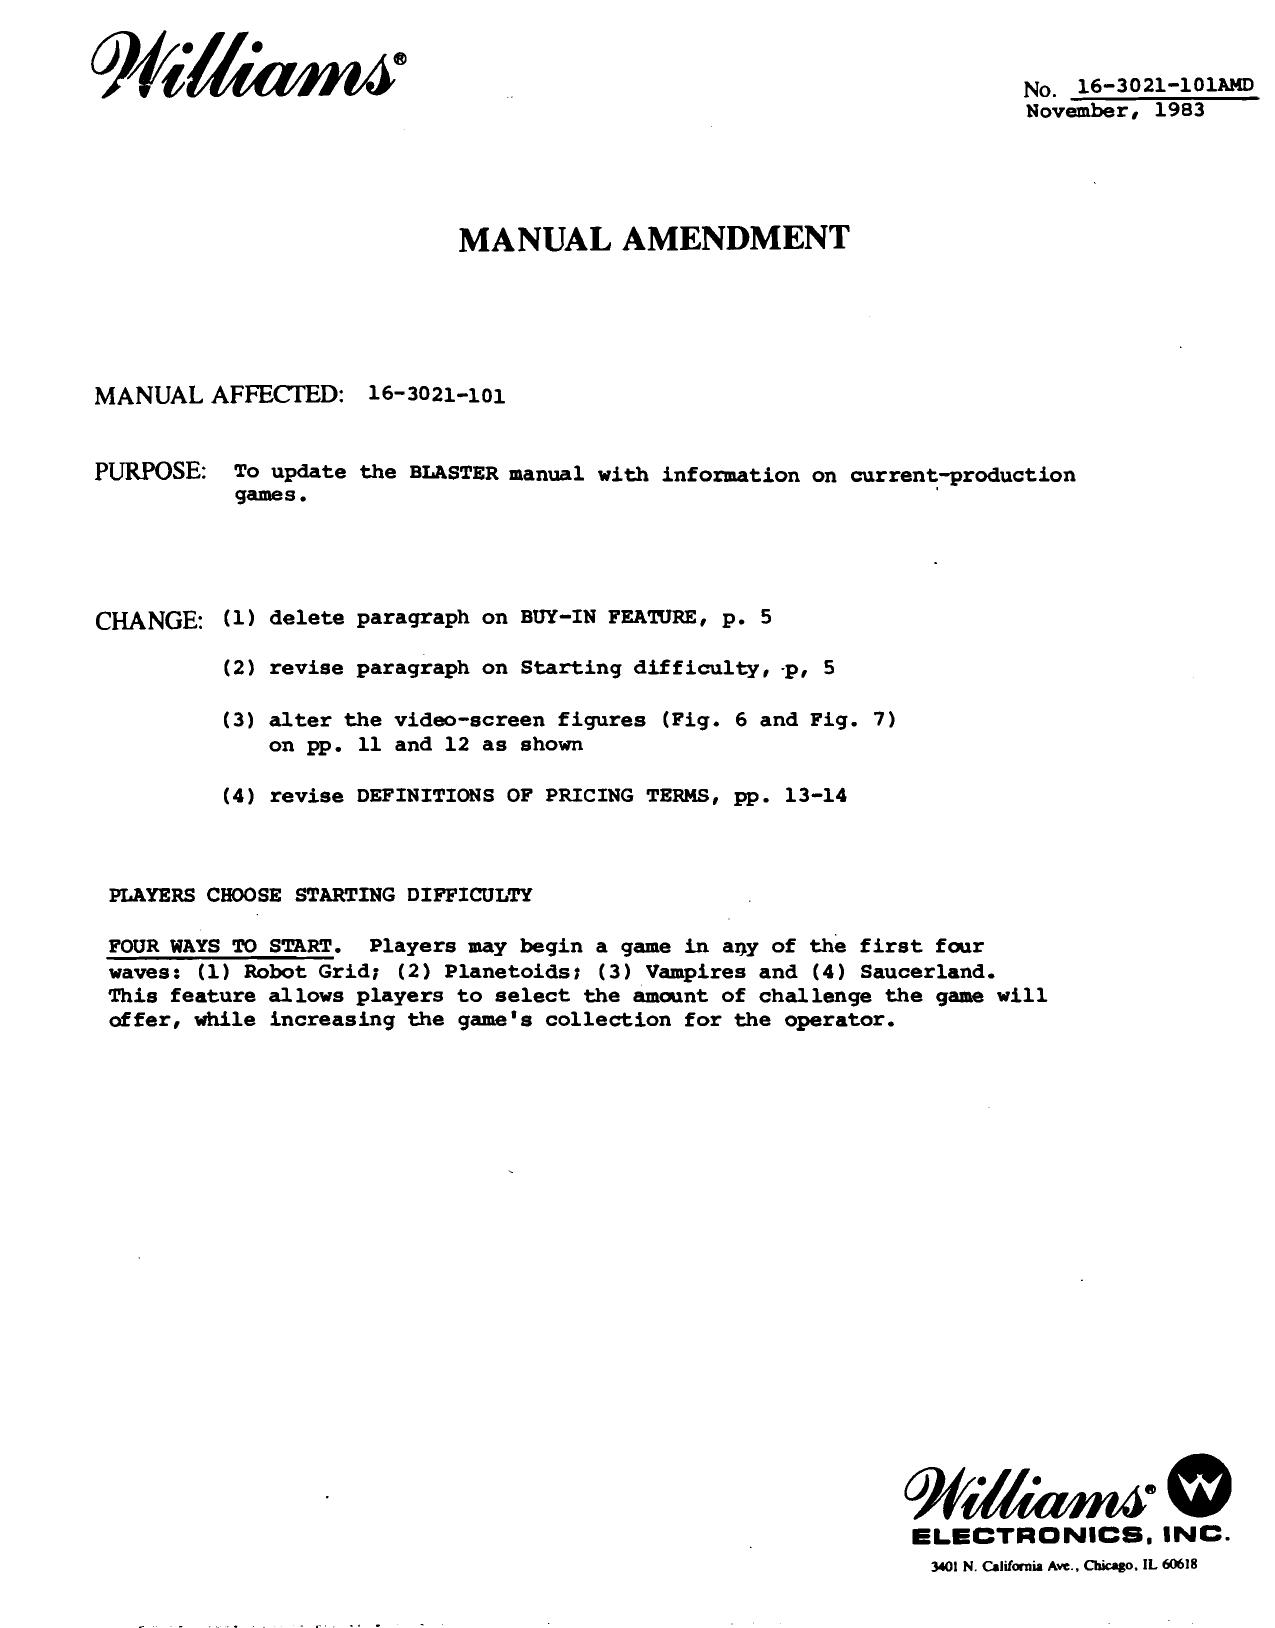 Blaster Manal Amendment